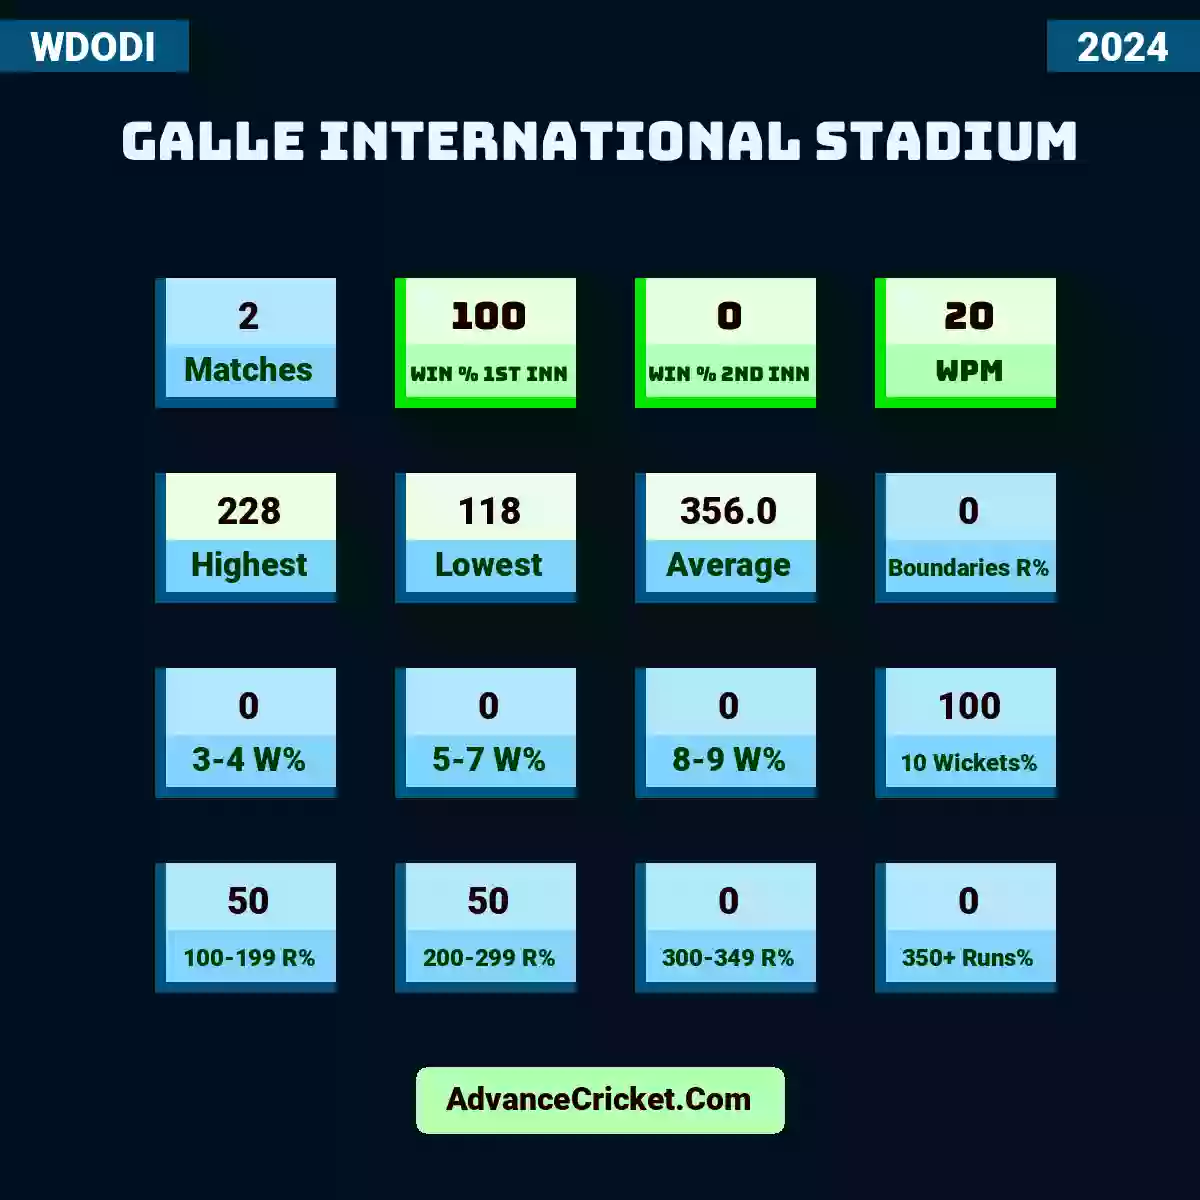 Image showing Galle International Stadium WDODI 2024 with Matches: 2, Win % 1st Inn: 100, Win % 2nd Inn: 0, WPM: 20, Highest: 228, Lowest: 118, Average: 356.0, Boundaries R%: 0, 3-4 W%: 0, 5-7 W%: 0, 8-9 W%: 0, 10 Wickets%: 100, 100-199 R%: 50, 200-299 R%: 50, 300-349 R%: 0, 350+ Runs%: 0.